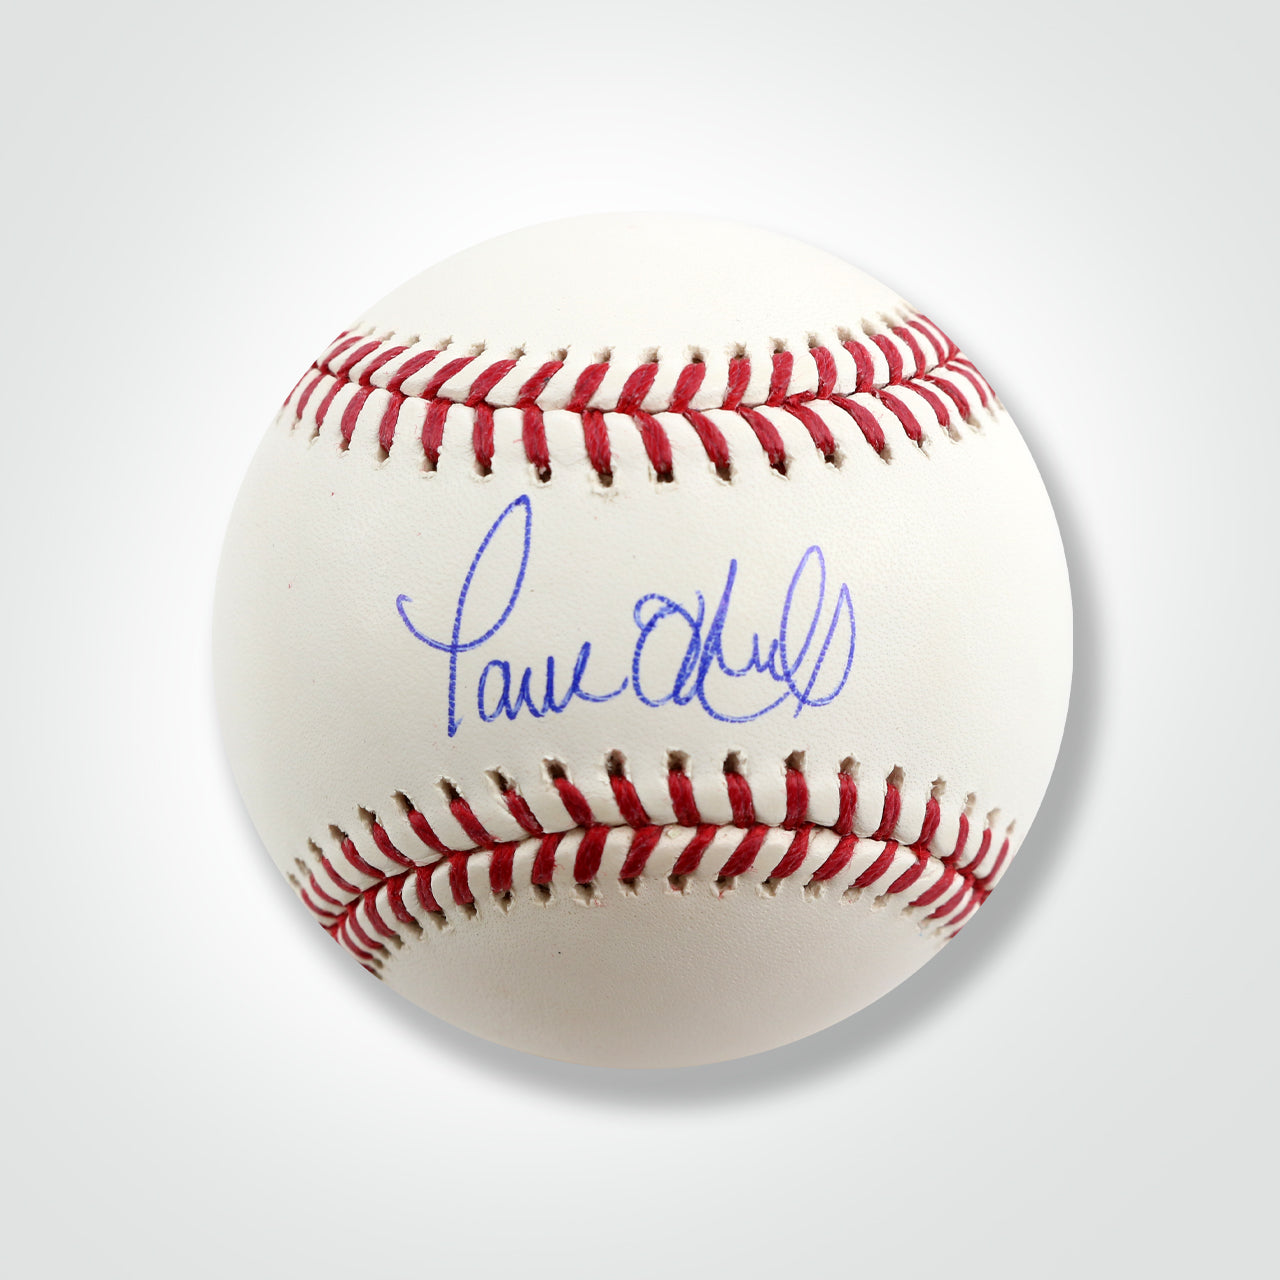 Paul O'Neill Signed Official Major League Baseball